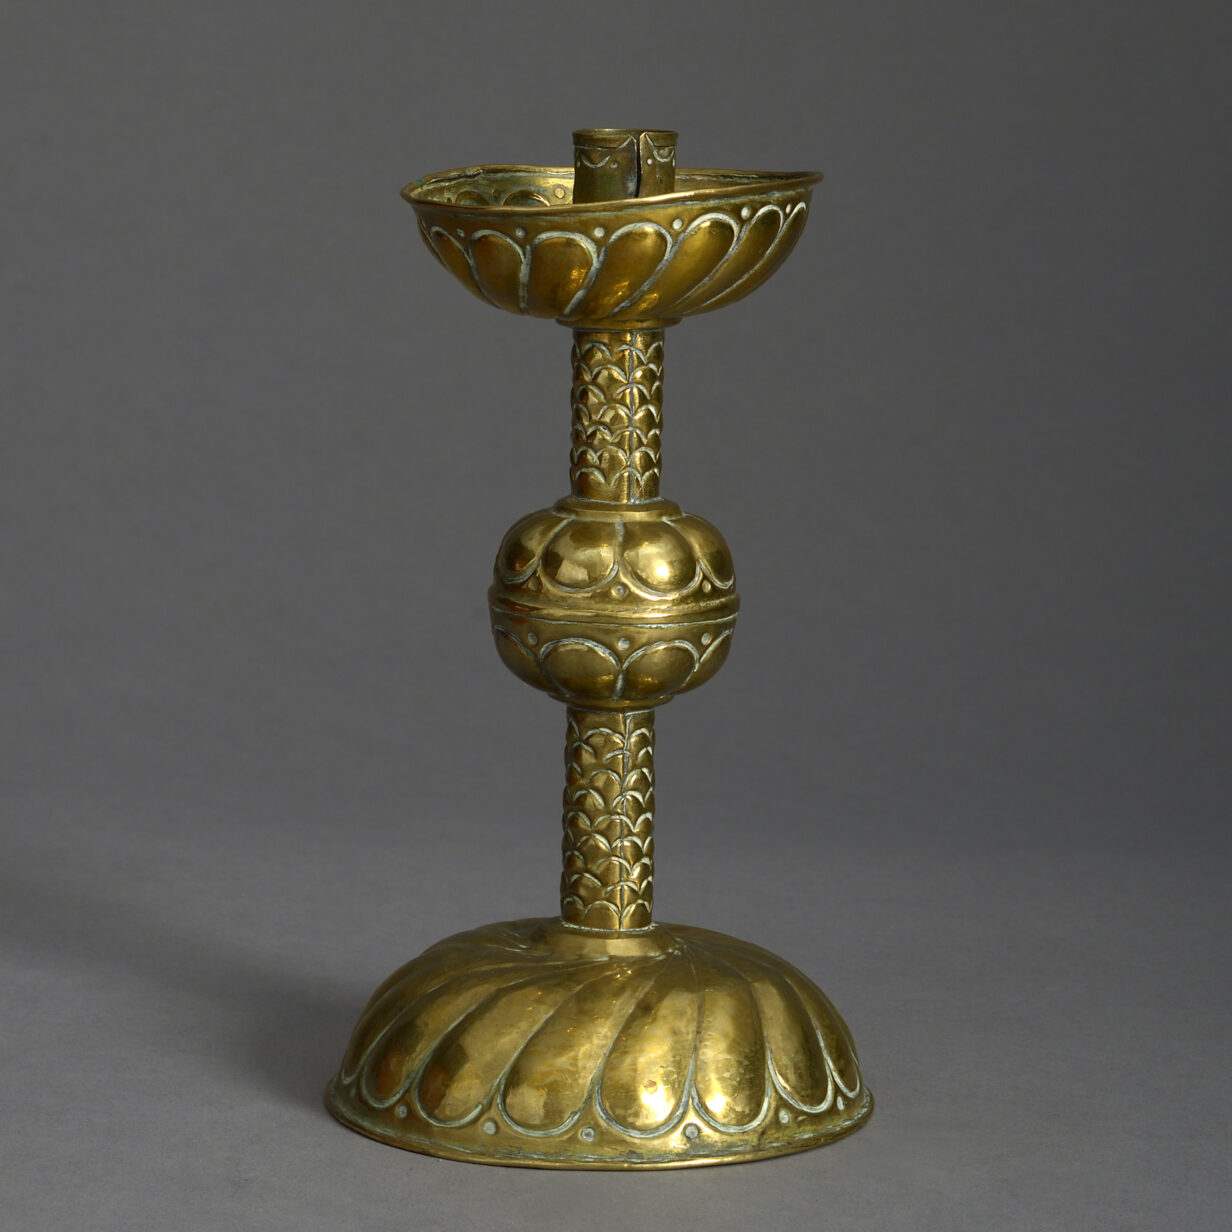 17th century brass candlestick